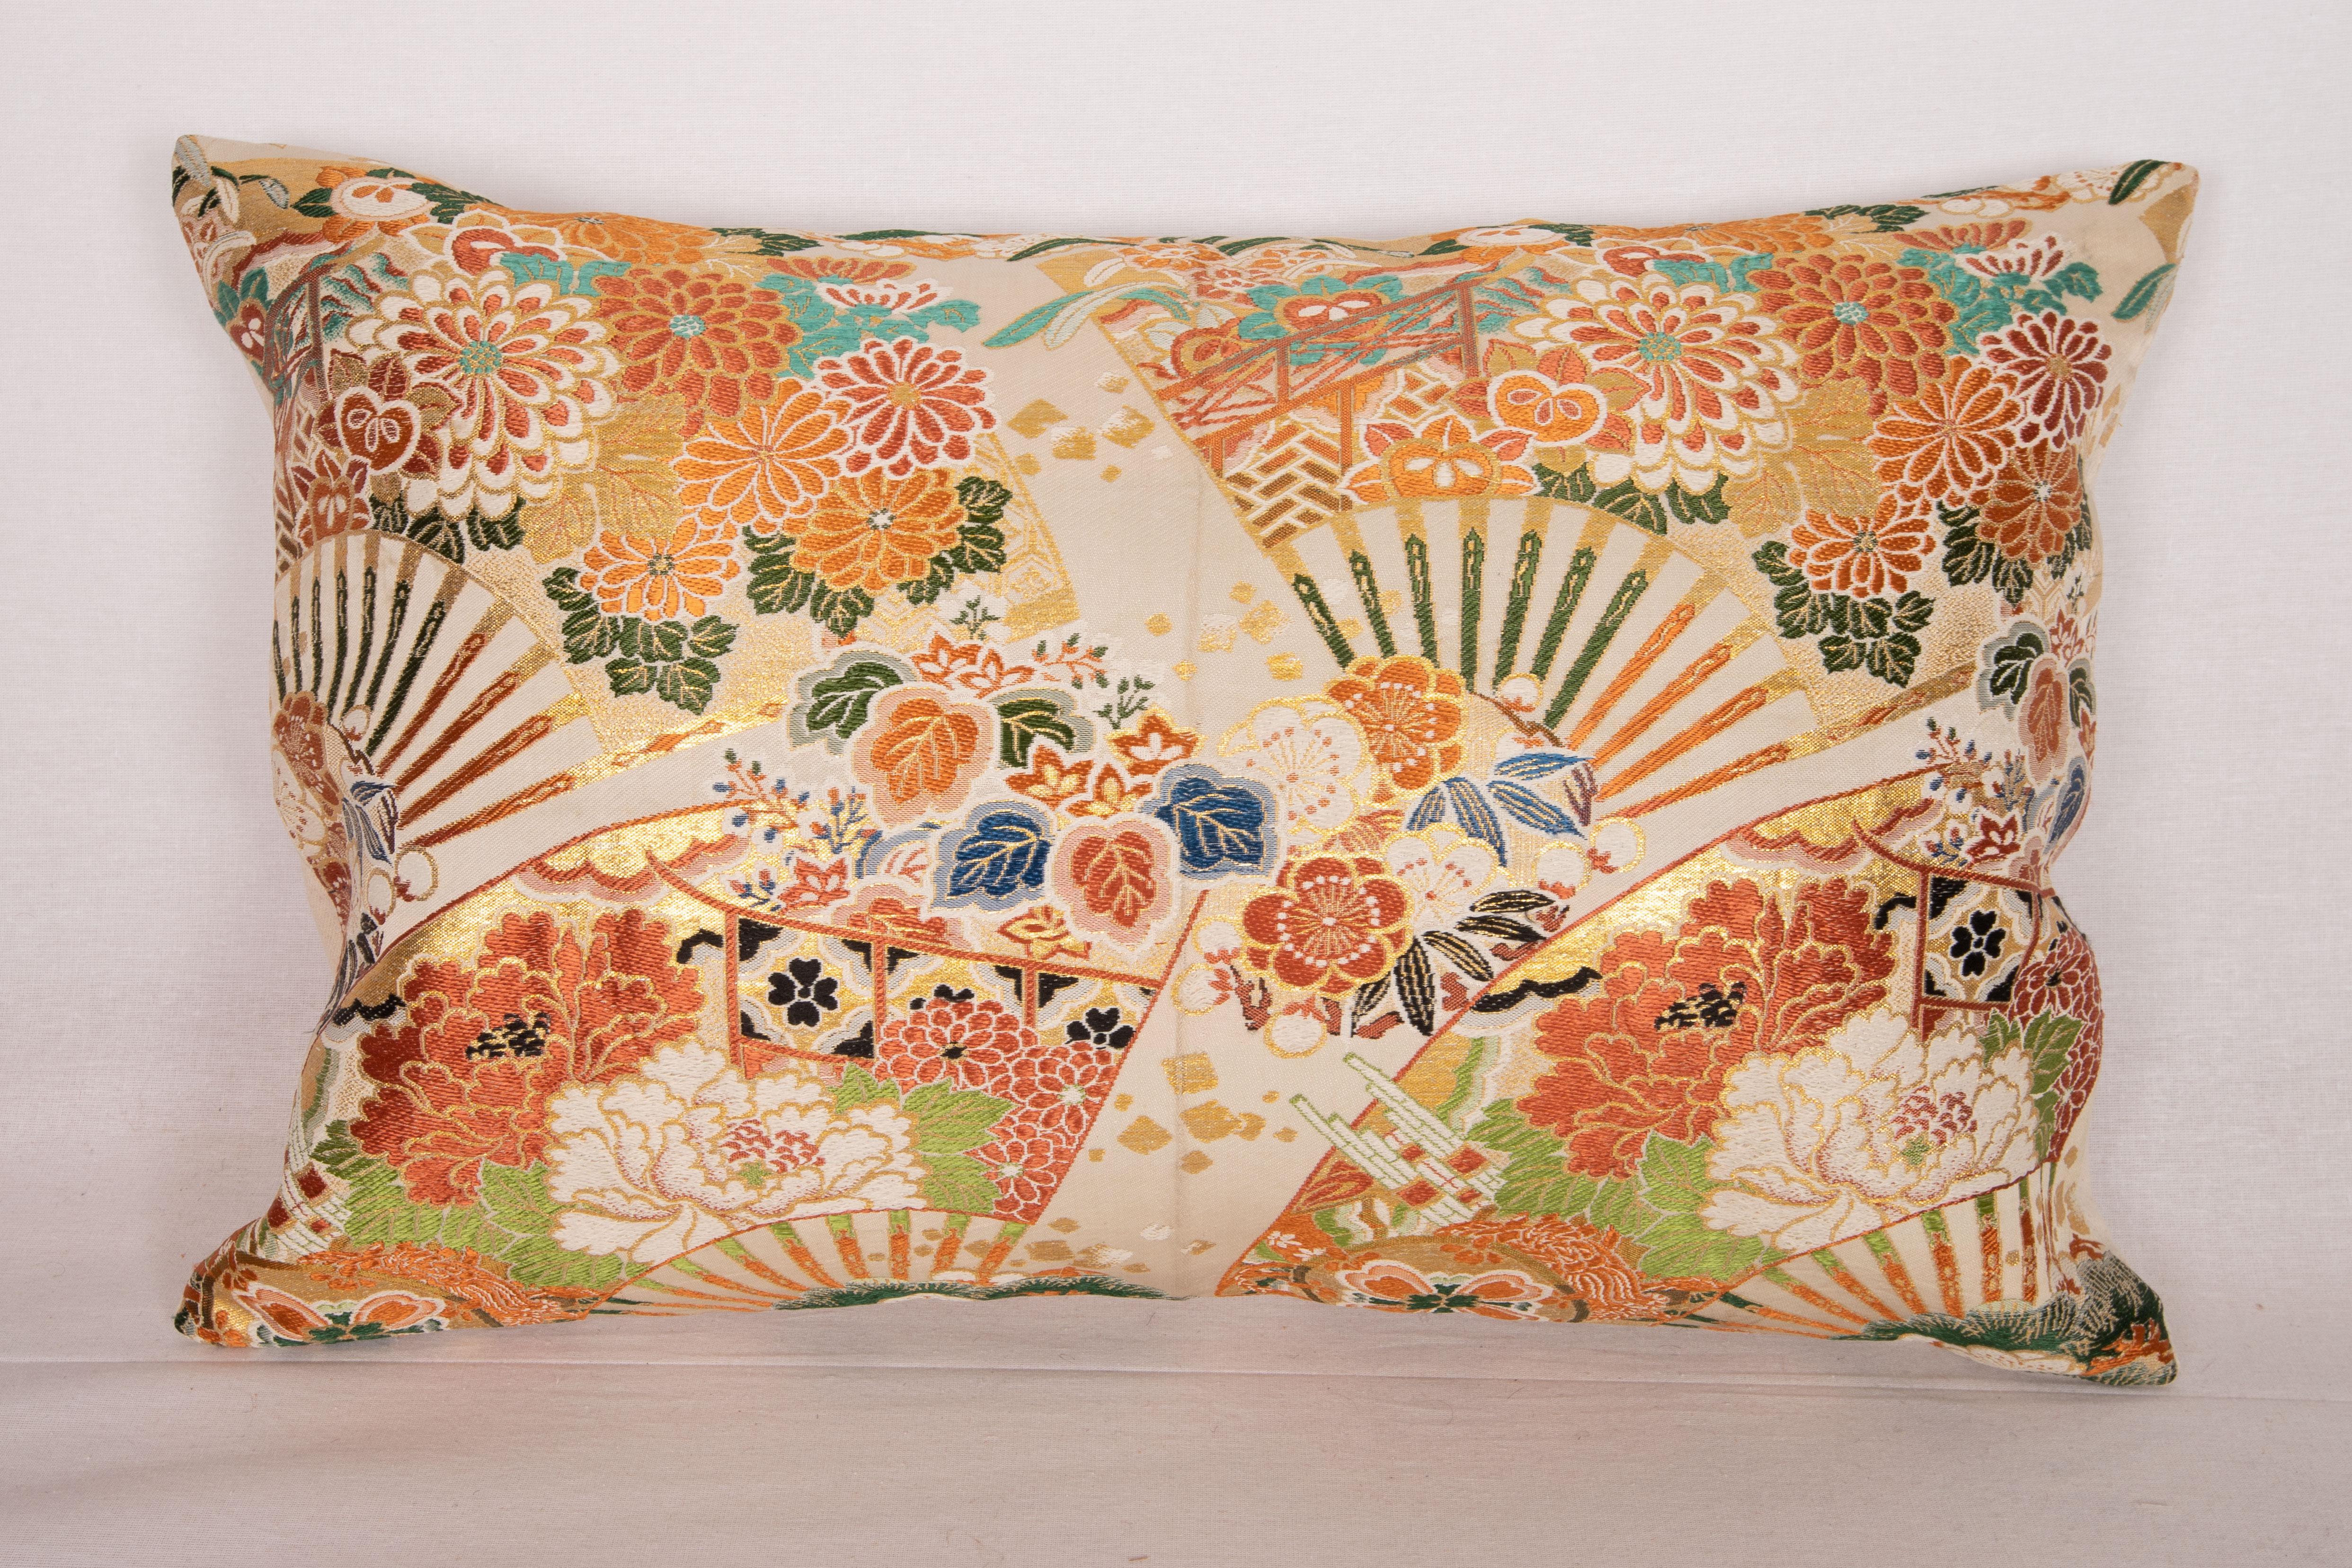 20th Century Obi Pillow Cover, Japan, Mid 20th C.